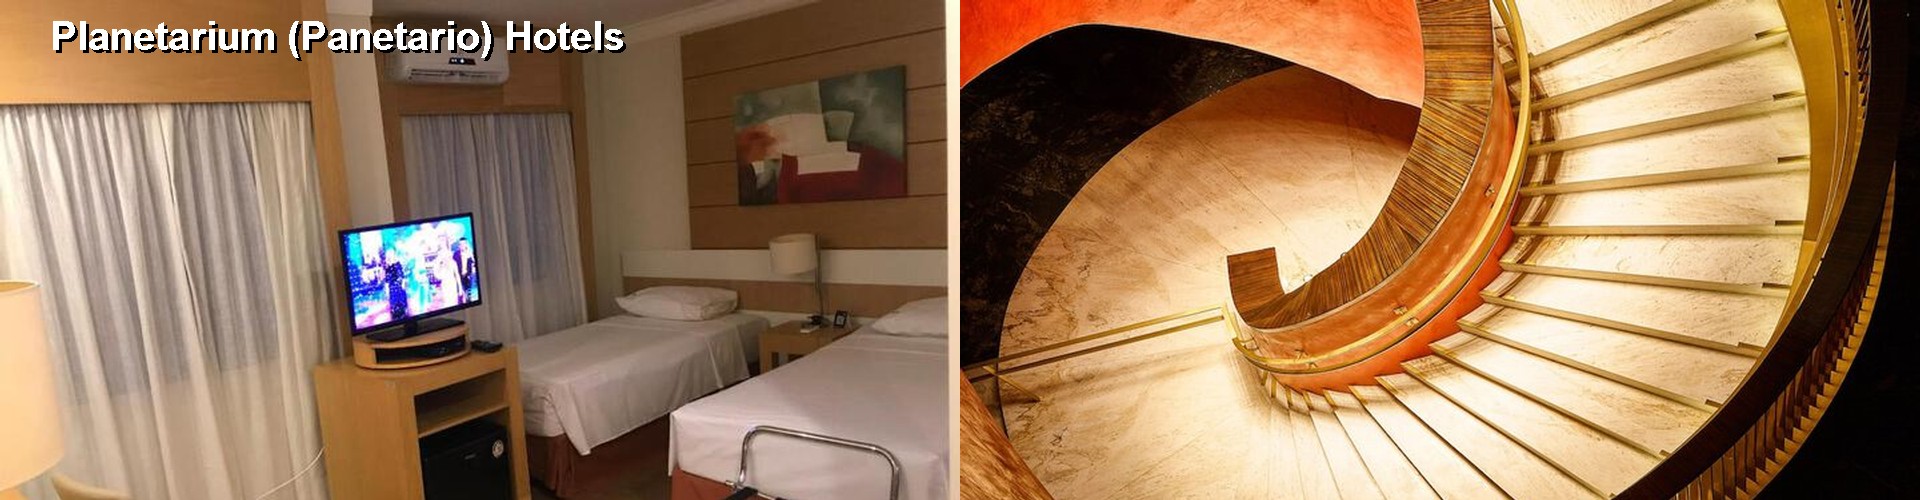 5 Best Hotels near Planetarium (Panetario)